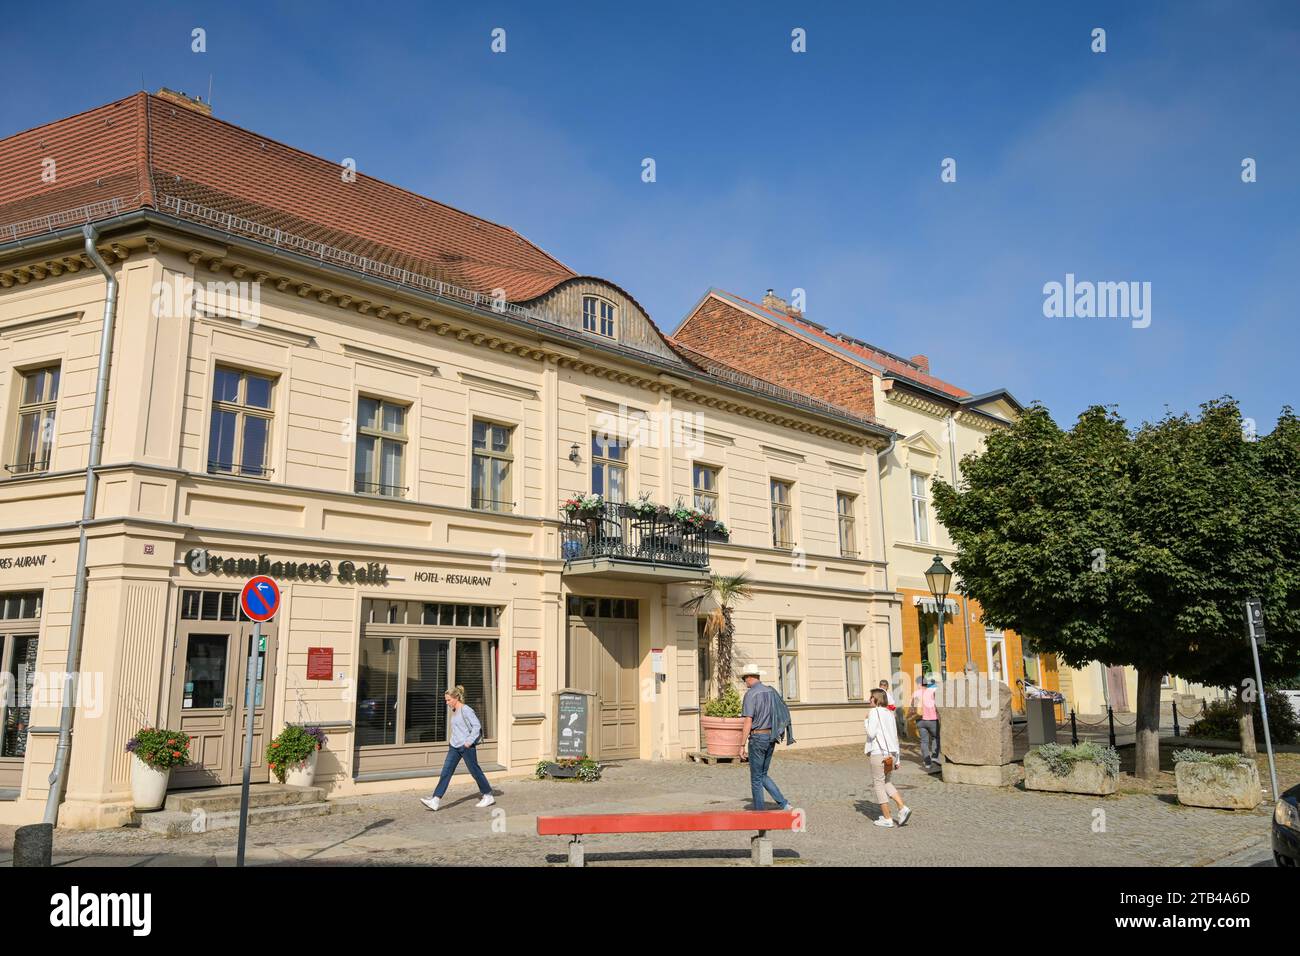 Street scene, Old Buildings, Hotel Grambauers Kalit, Rosenstrasse, Hoher Steinweg, città vecchia, Angermuende, Brandeburgo, Germania Foto Stock